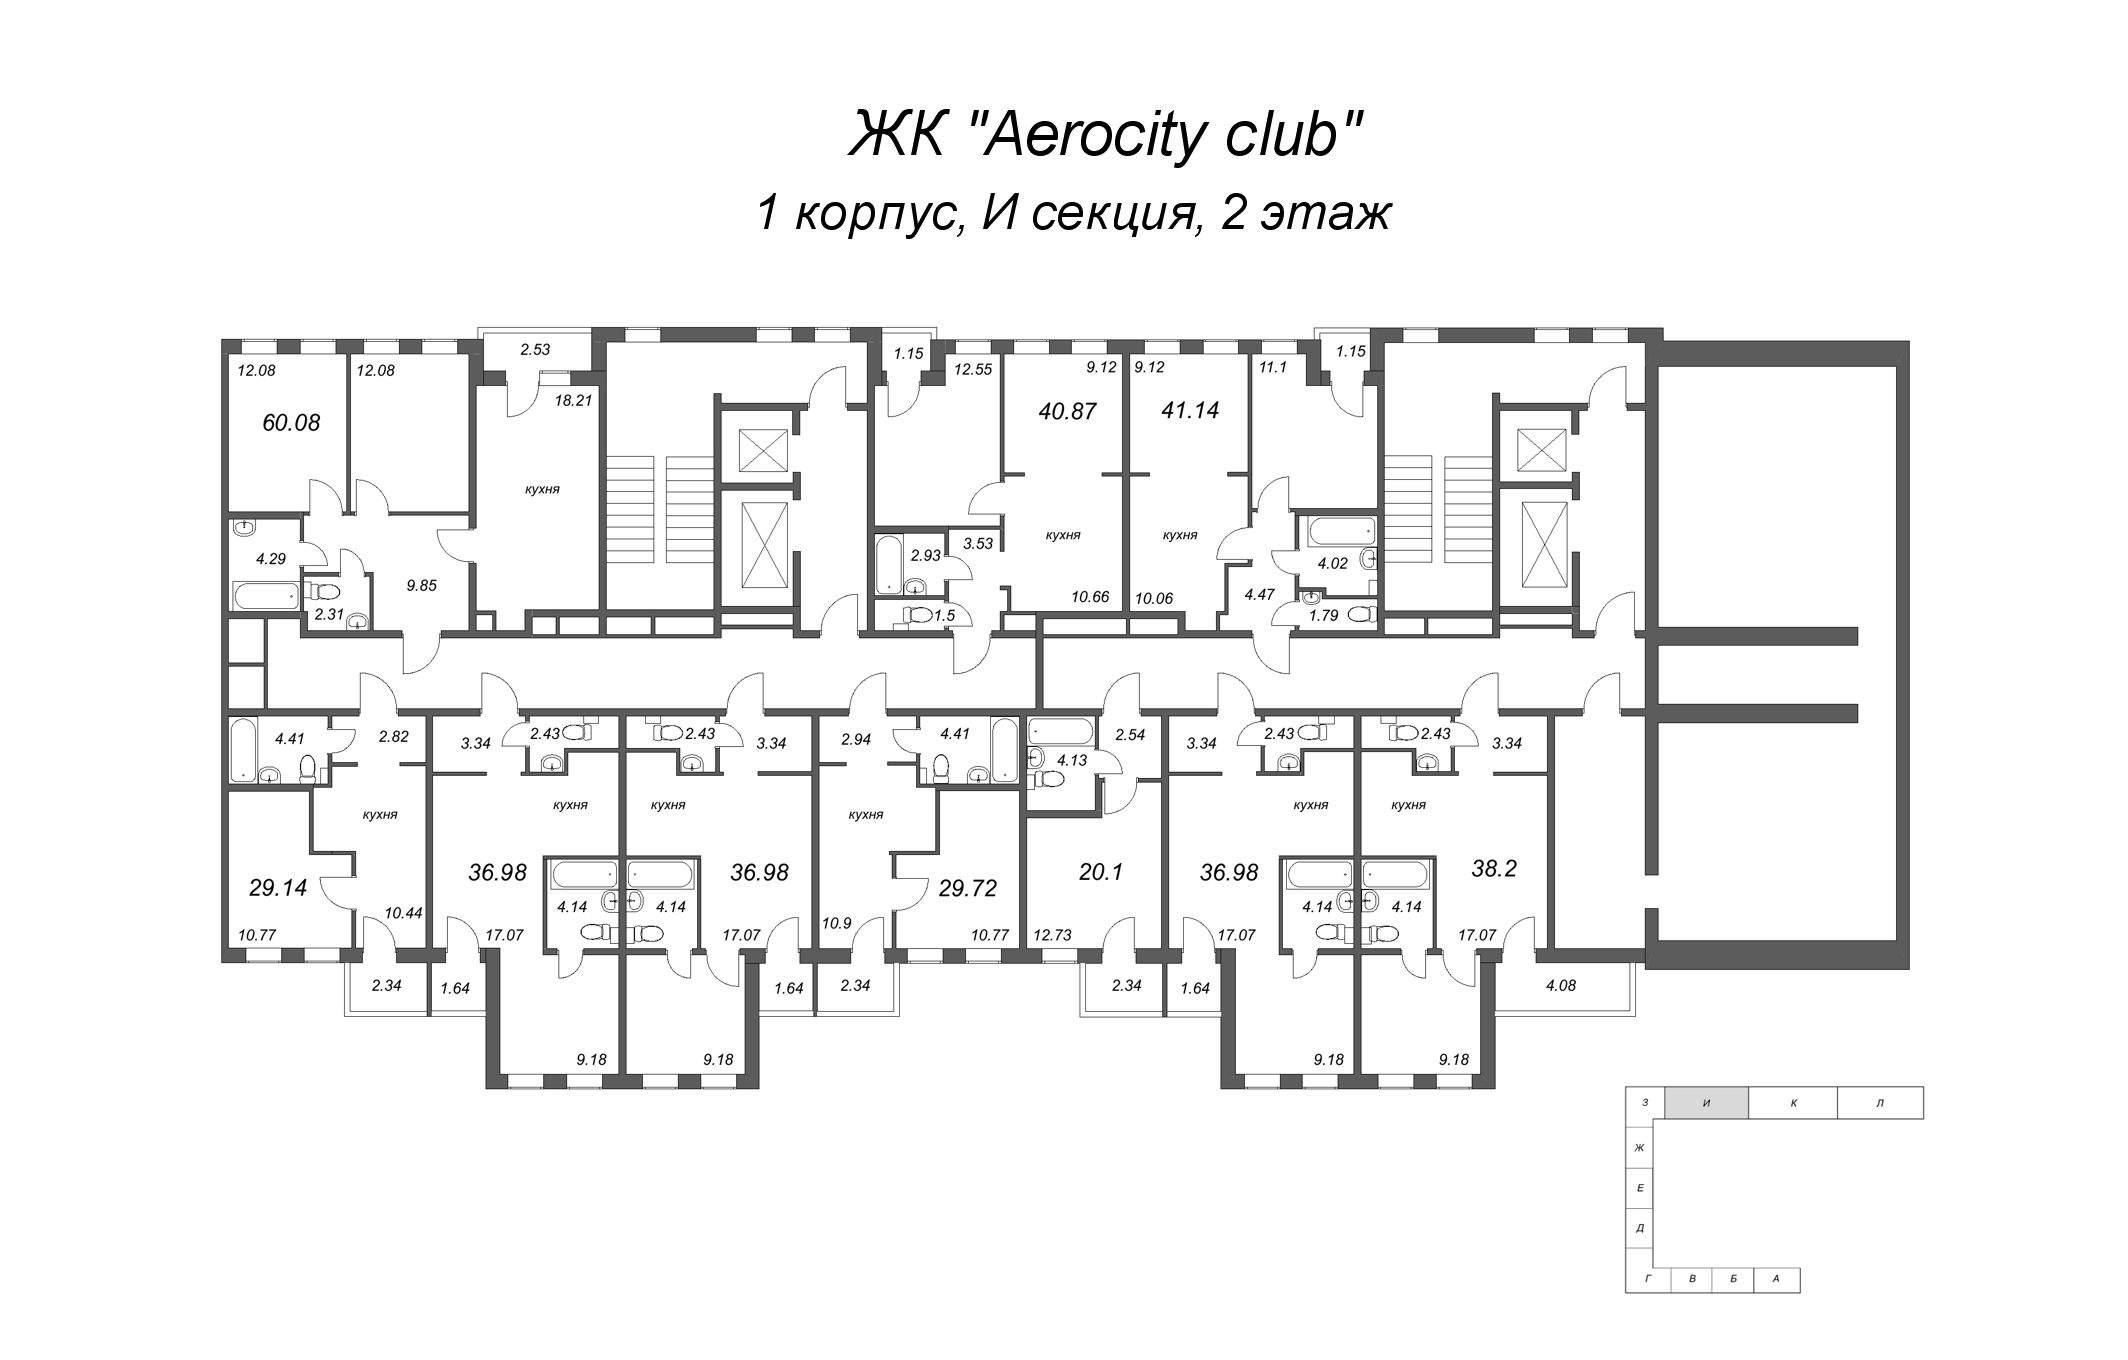 3-комнатная (Евро) квартира, 60.08 м² - планировка этажа